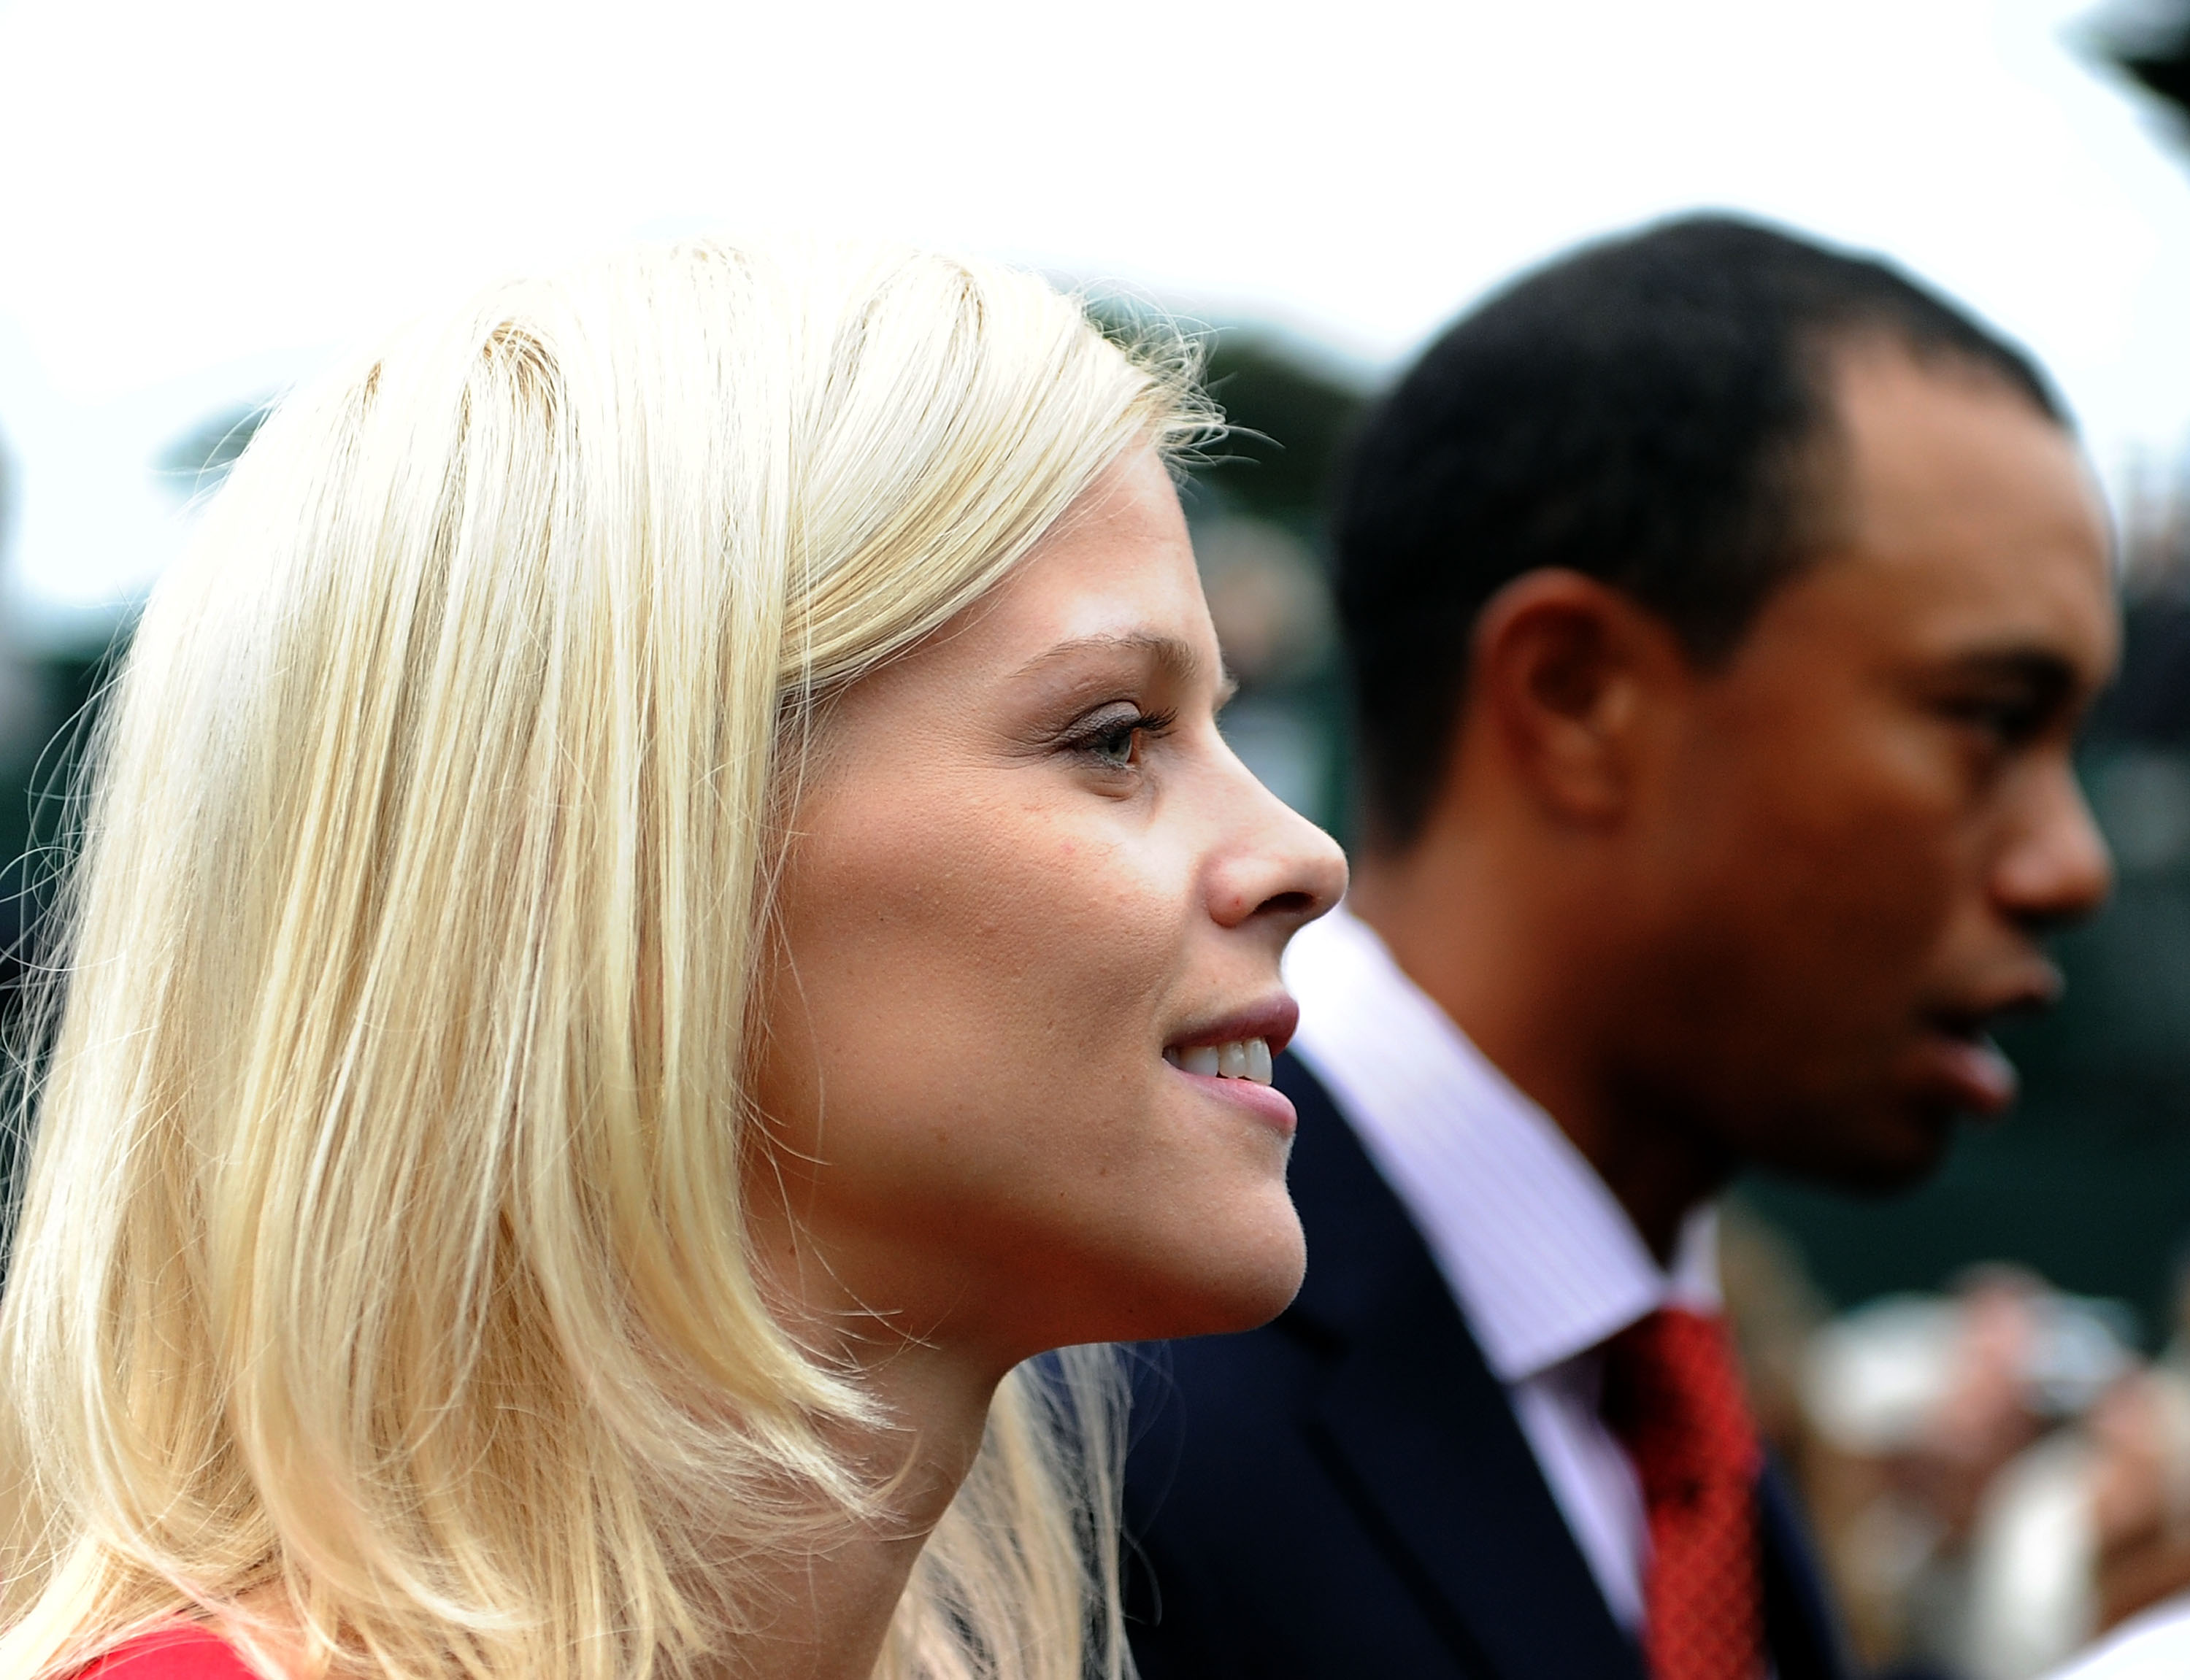 Elin Nordegren and now-ex-husband Tiger Woods in 2009